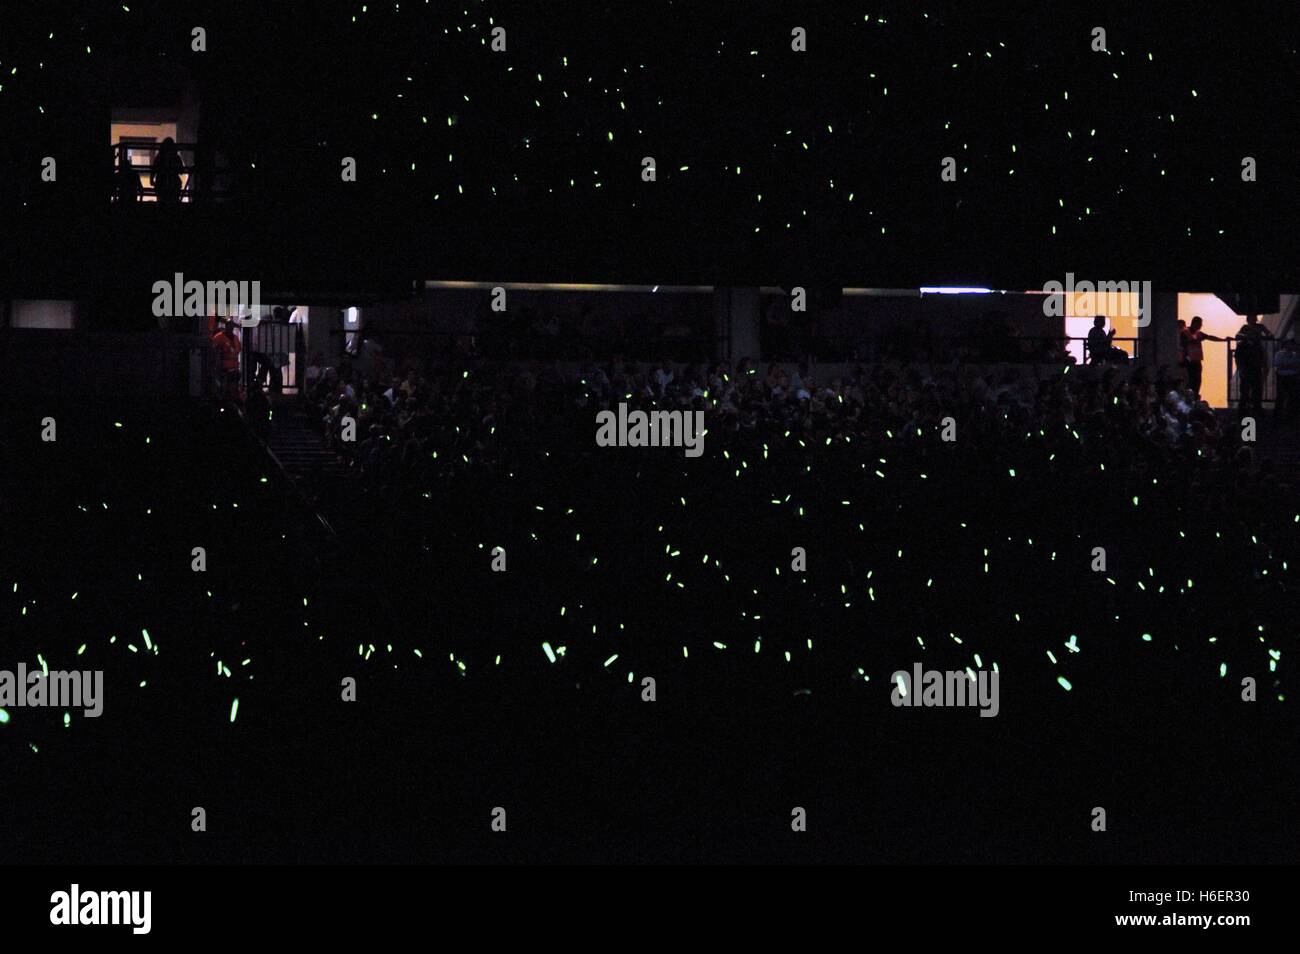 A stadium full of glow sticks during Leonard Cohen's concert in Israel, September 24, 2009 Stock Photo